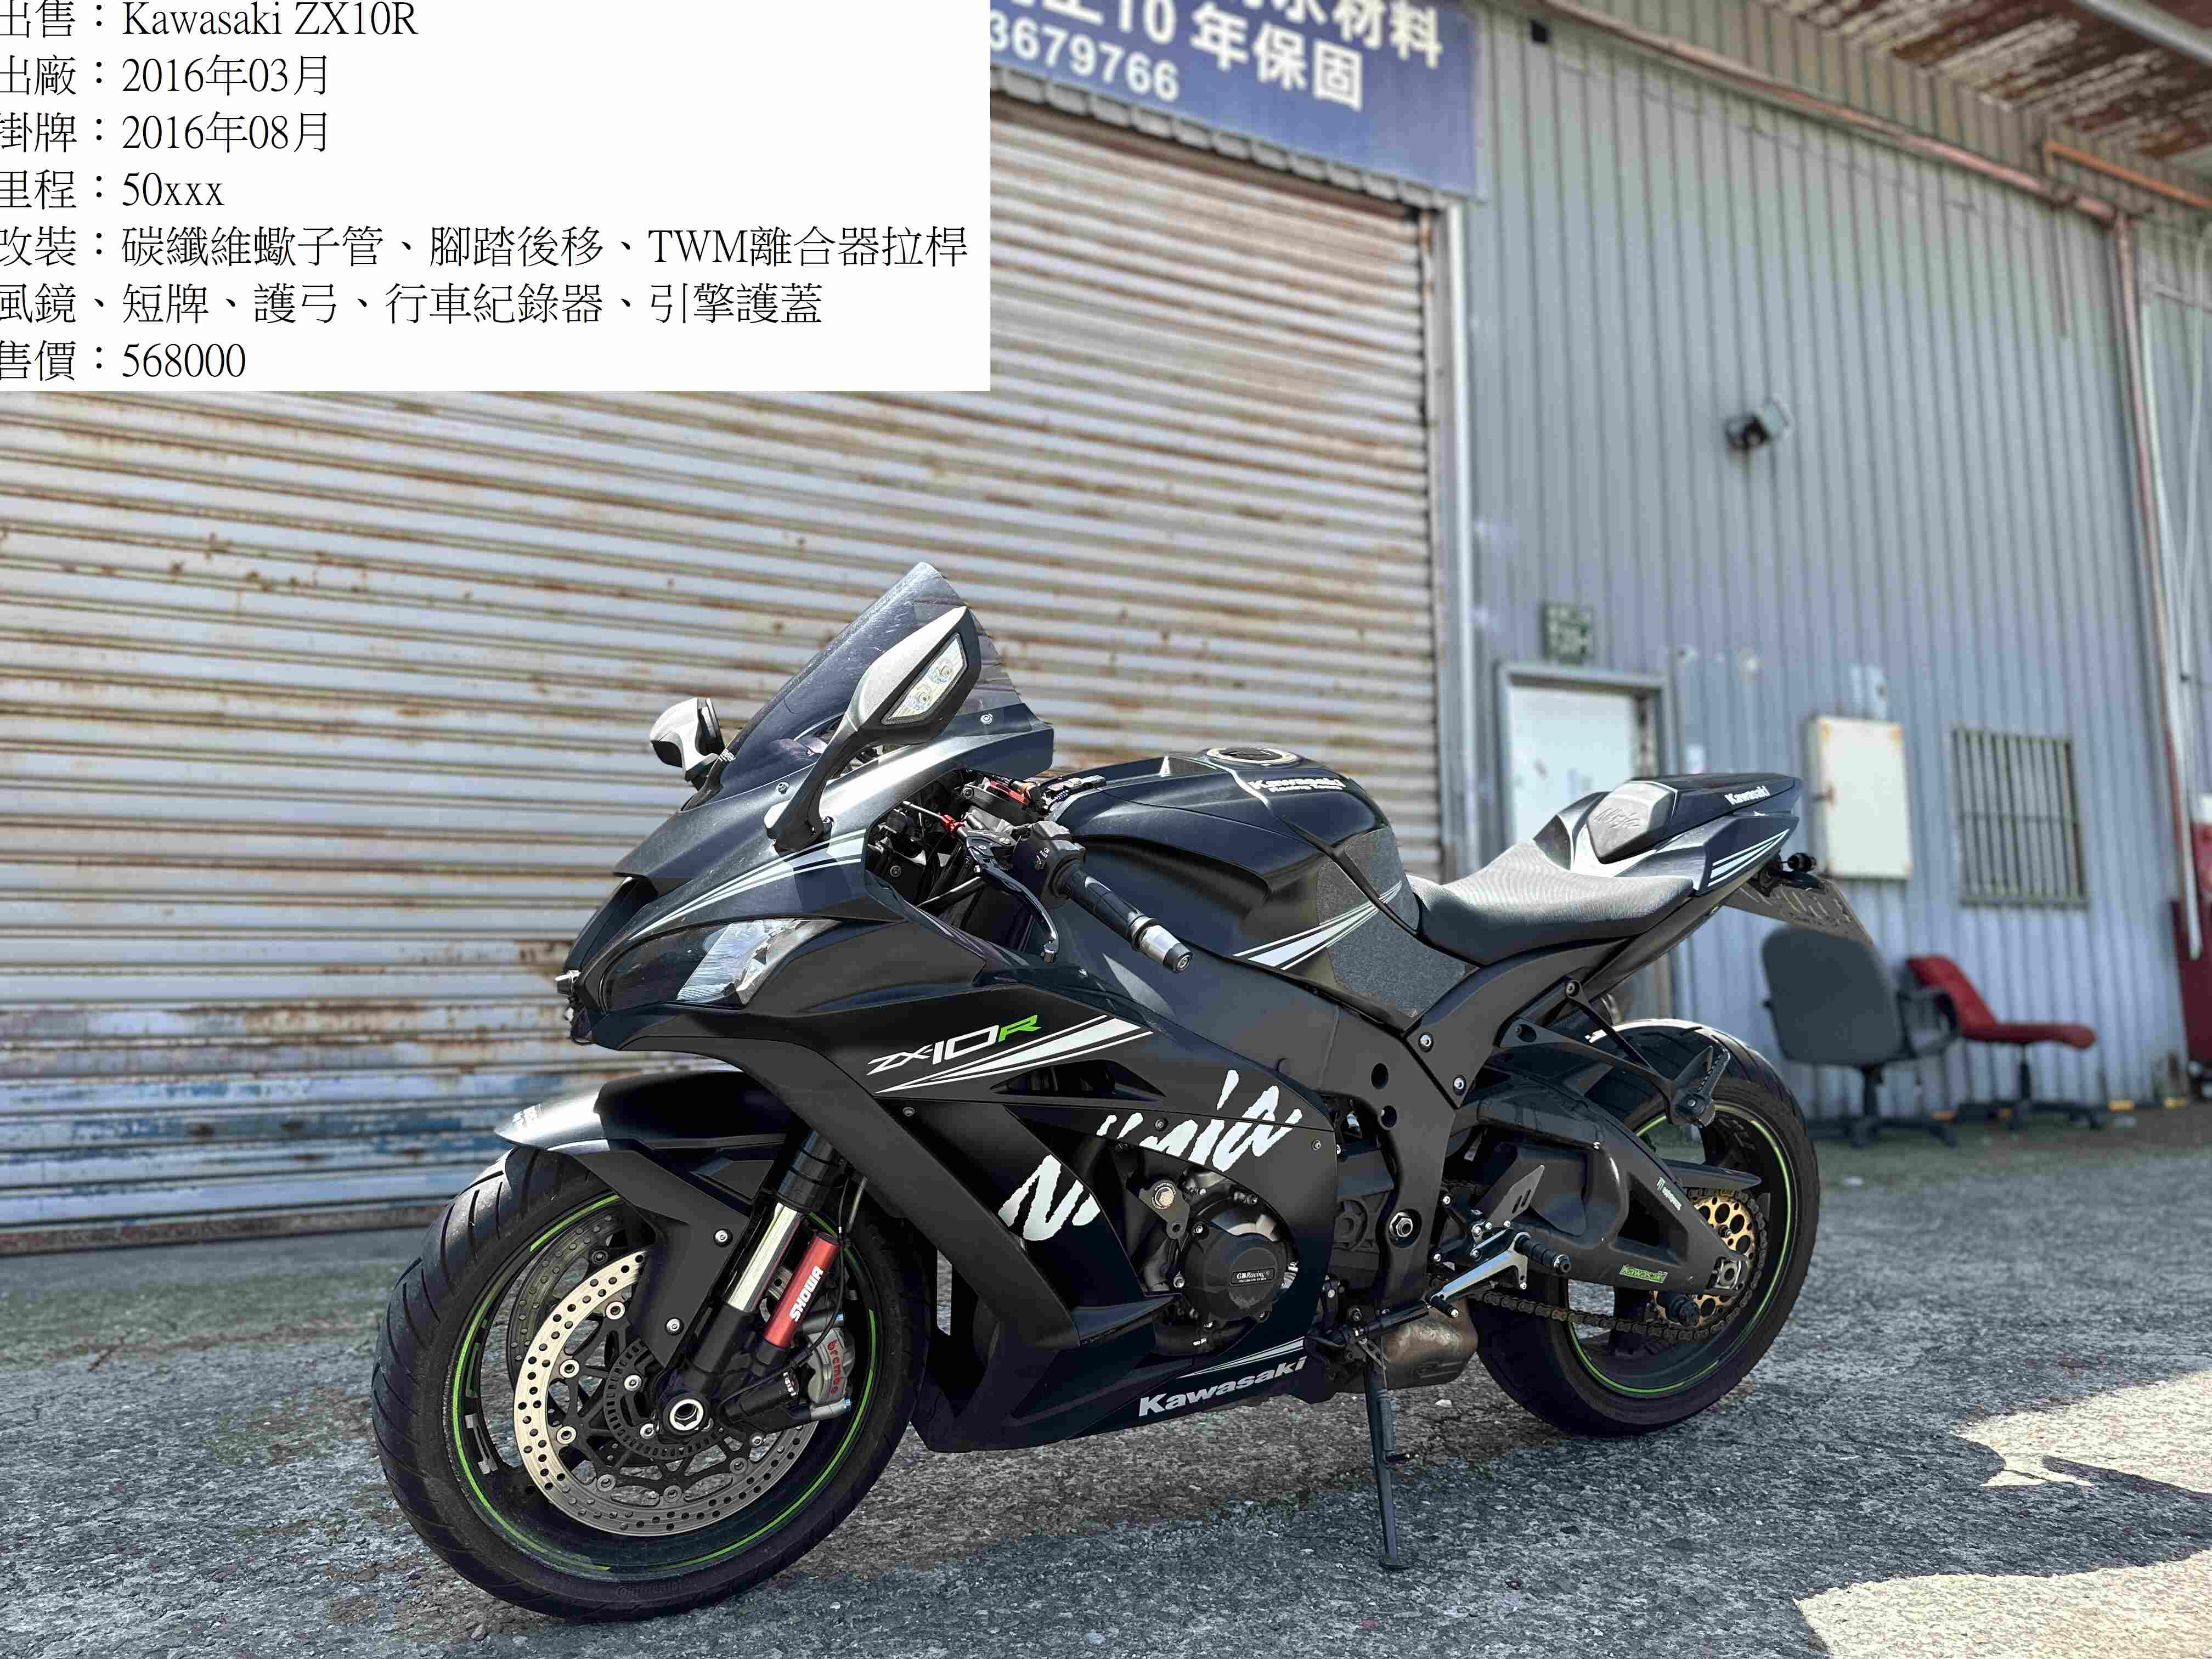 【湯姆重機】KAWASAKI NINJA ZX-10R - 「Webike-摩托車市」 湯姆重機 2016 Kawasaki ZX10R